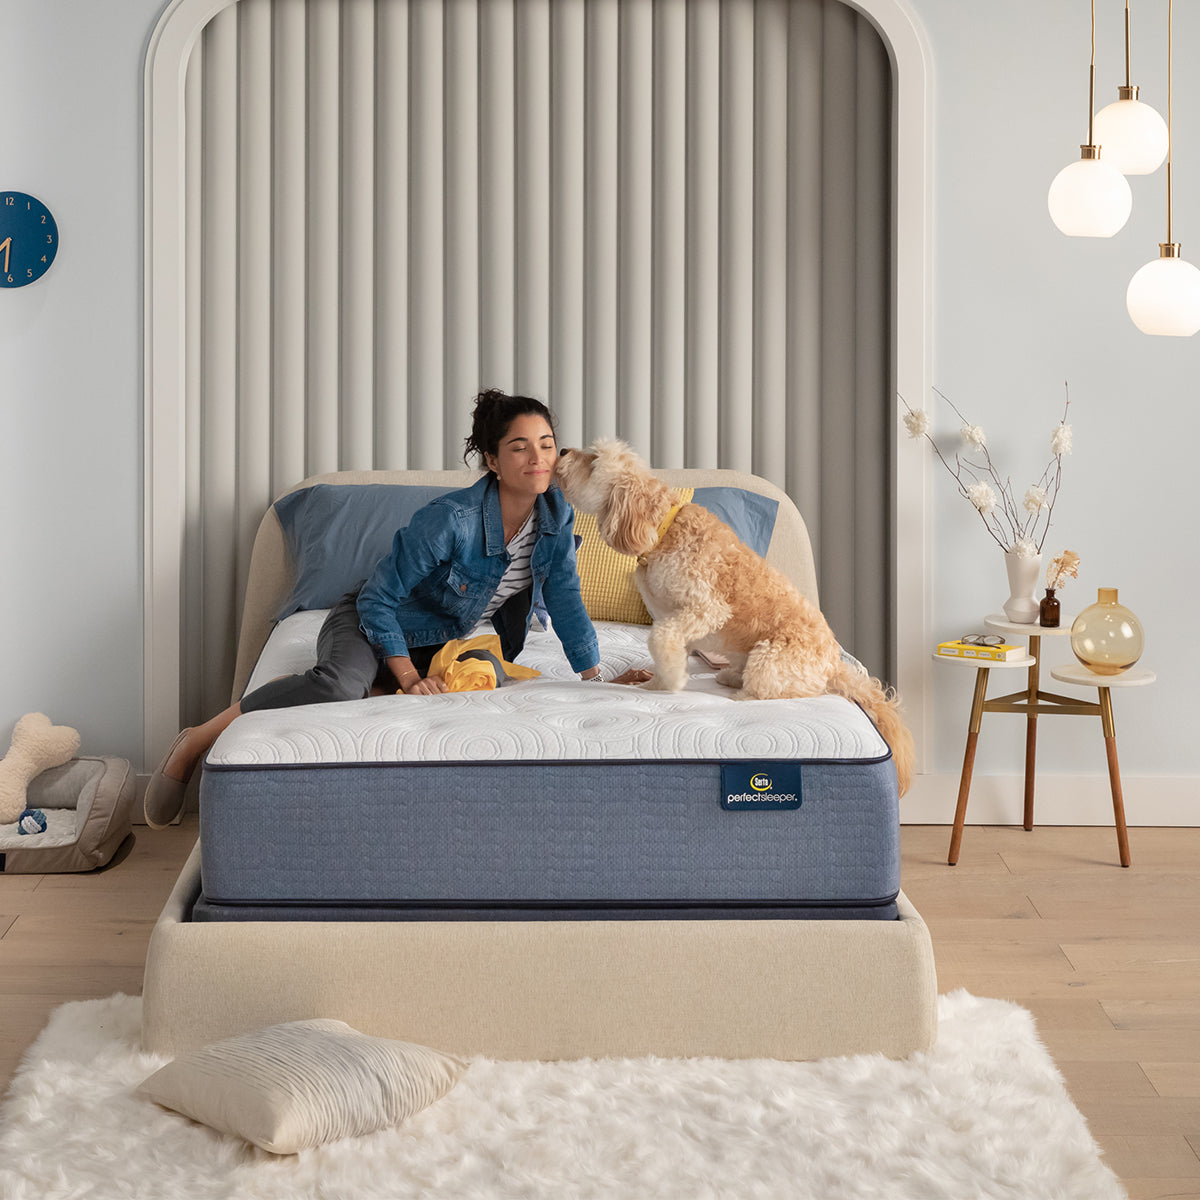 Serta Perfect Sleeper Aruba Mattress In Bedroom With Woman And Dog